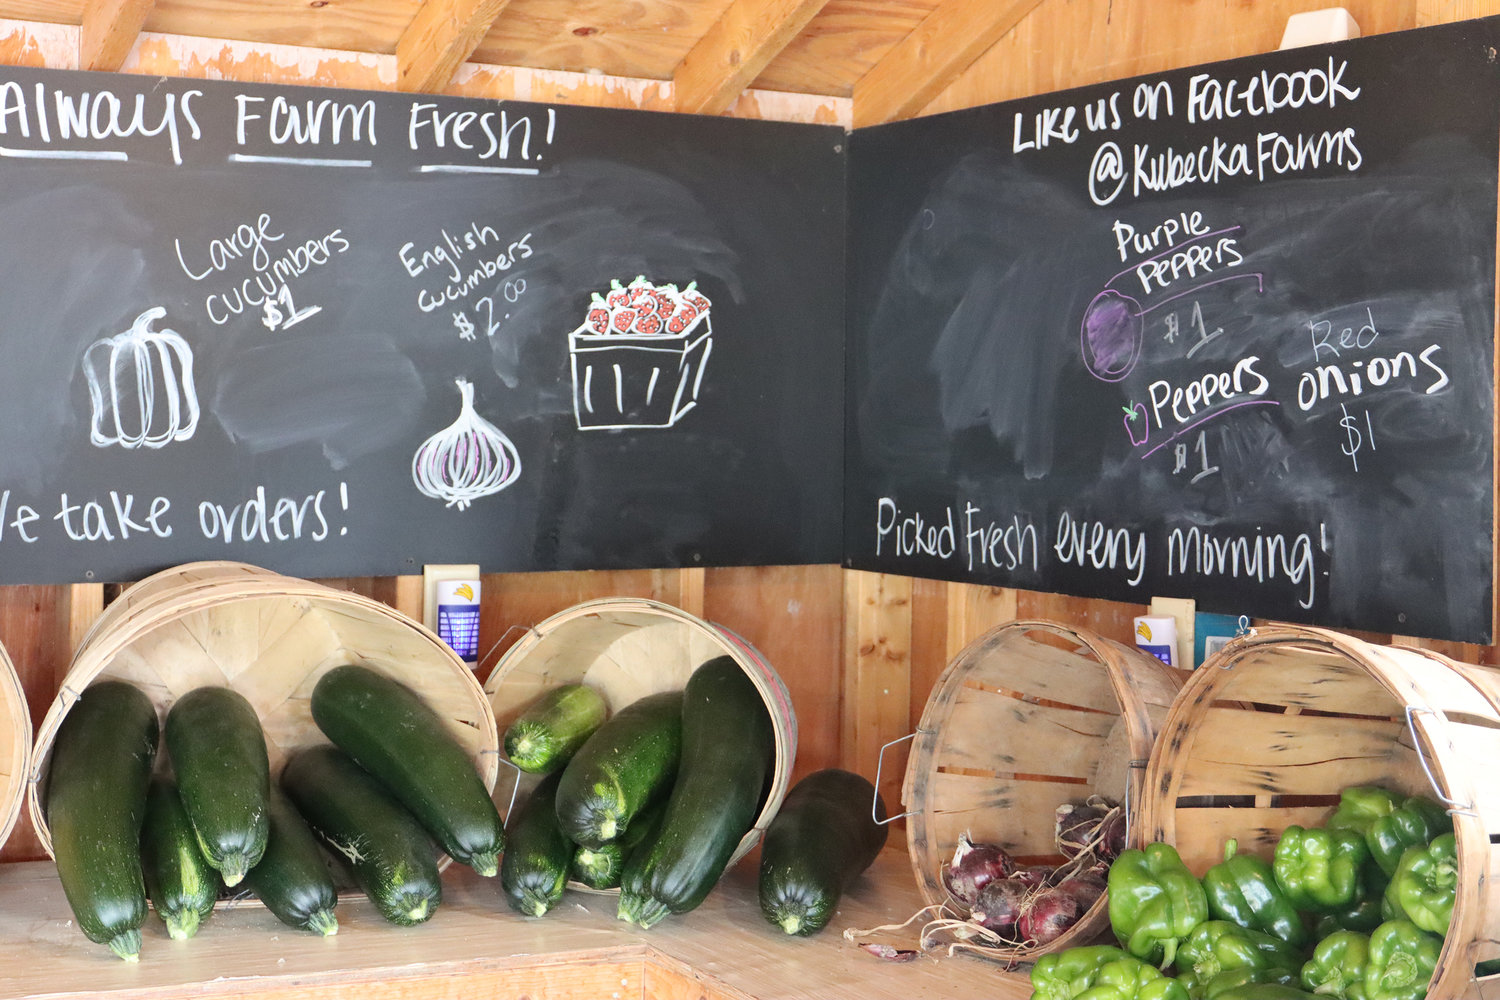 Kubecka Farms sells its fresh produce at last year’s Madison County Open  Farm Day.